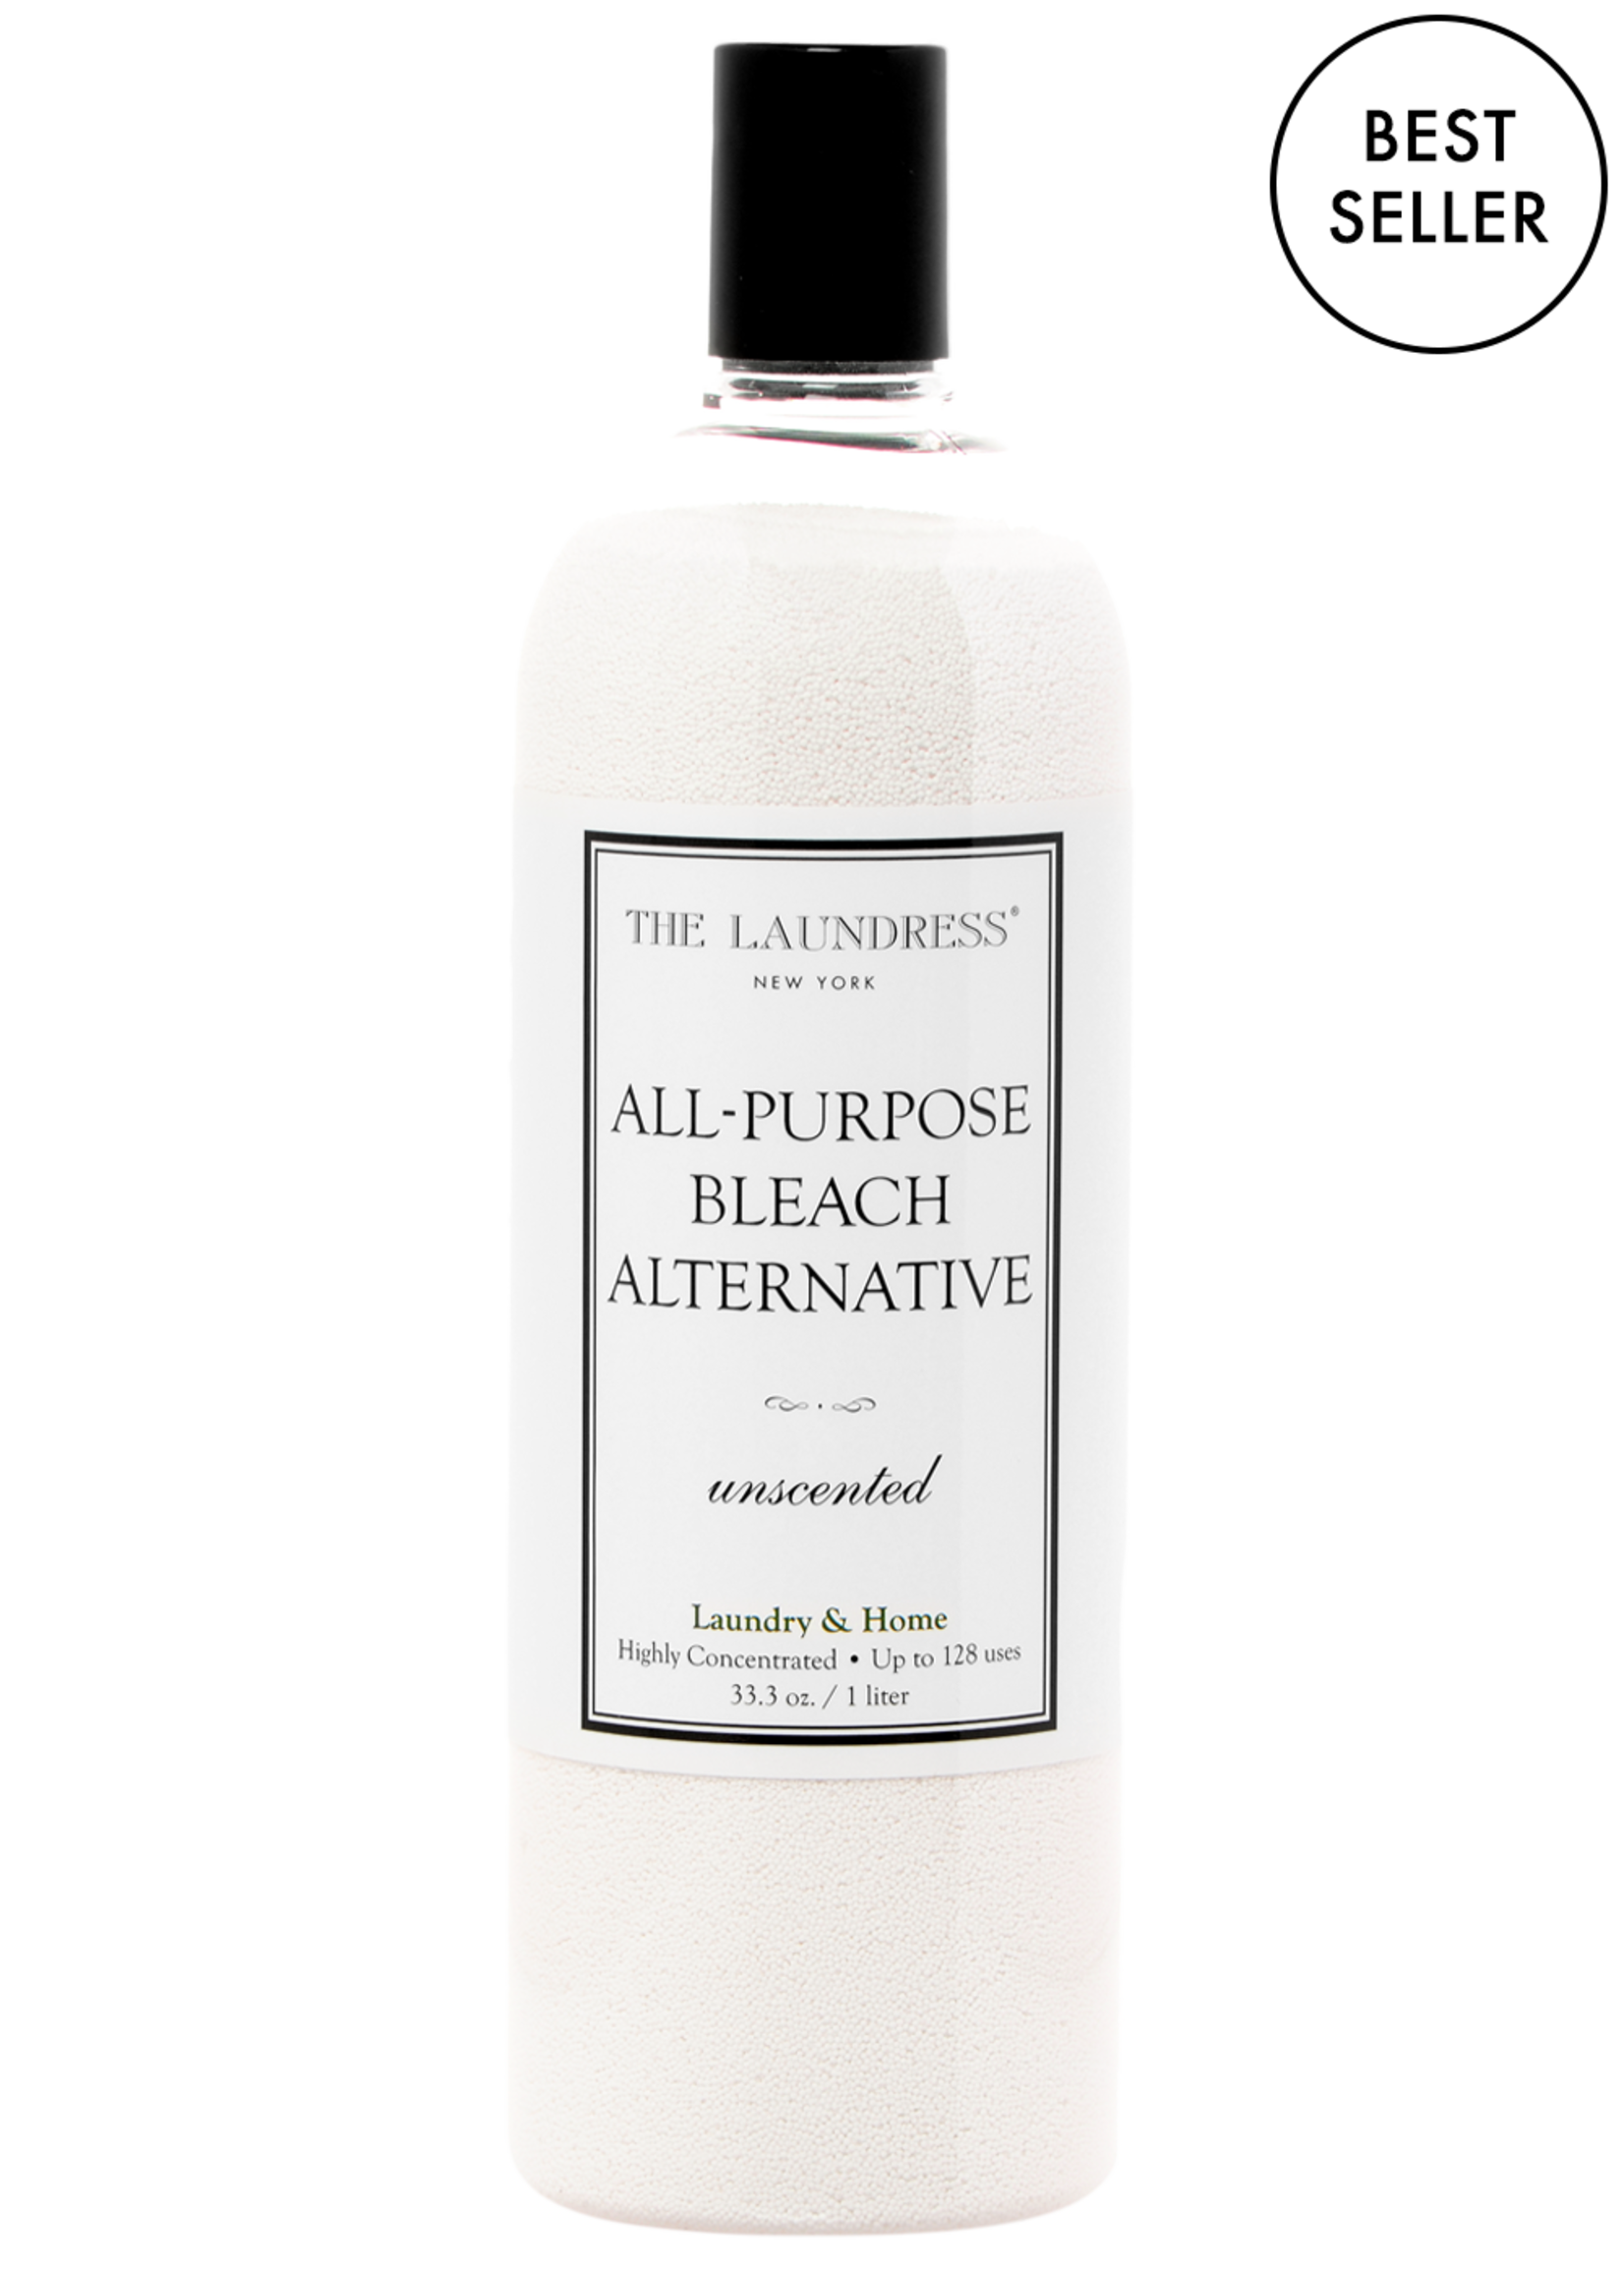 The Laundress New York All-Purpose Bleach Alternative